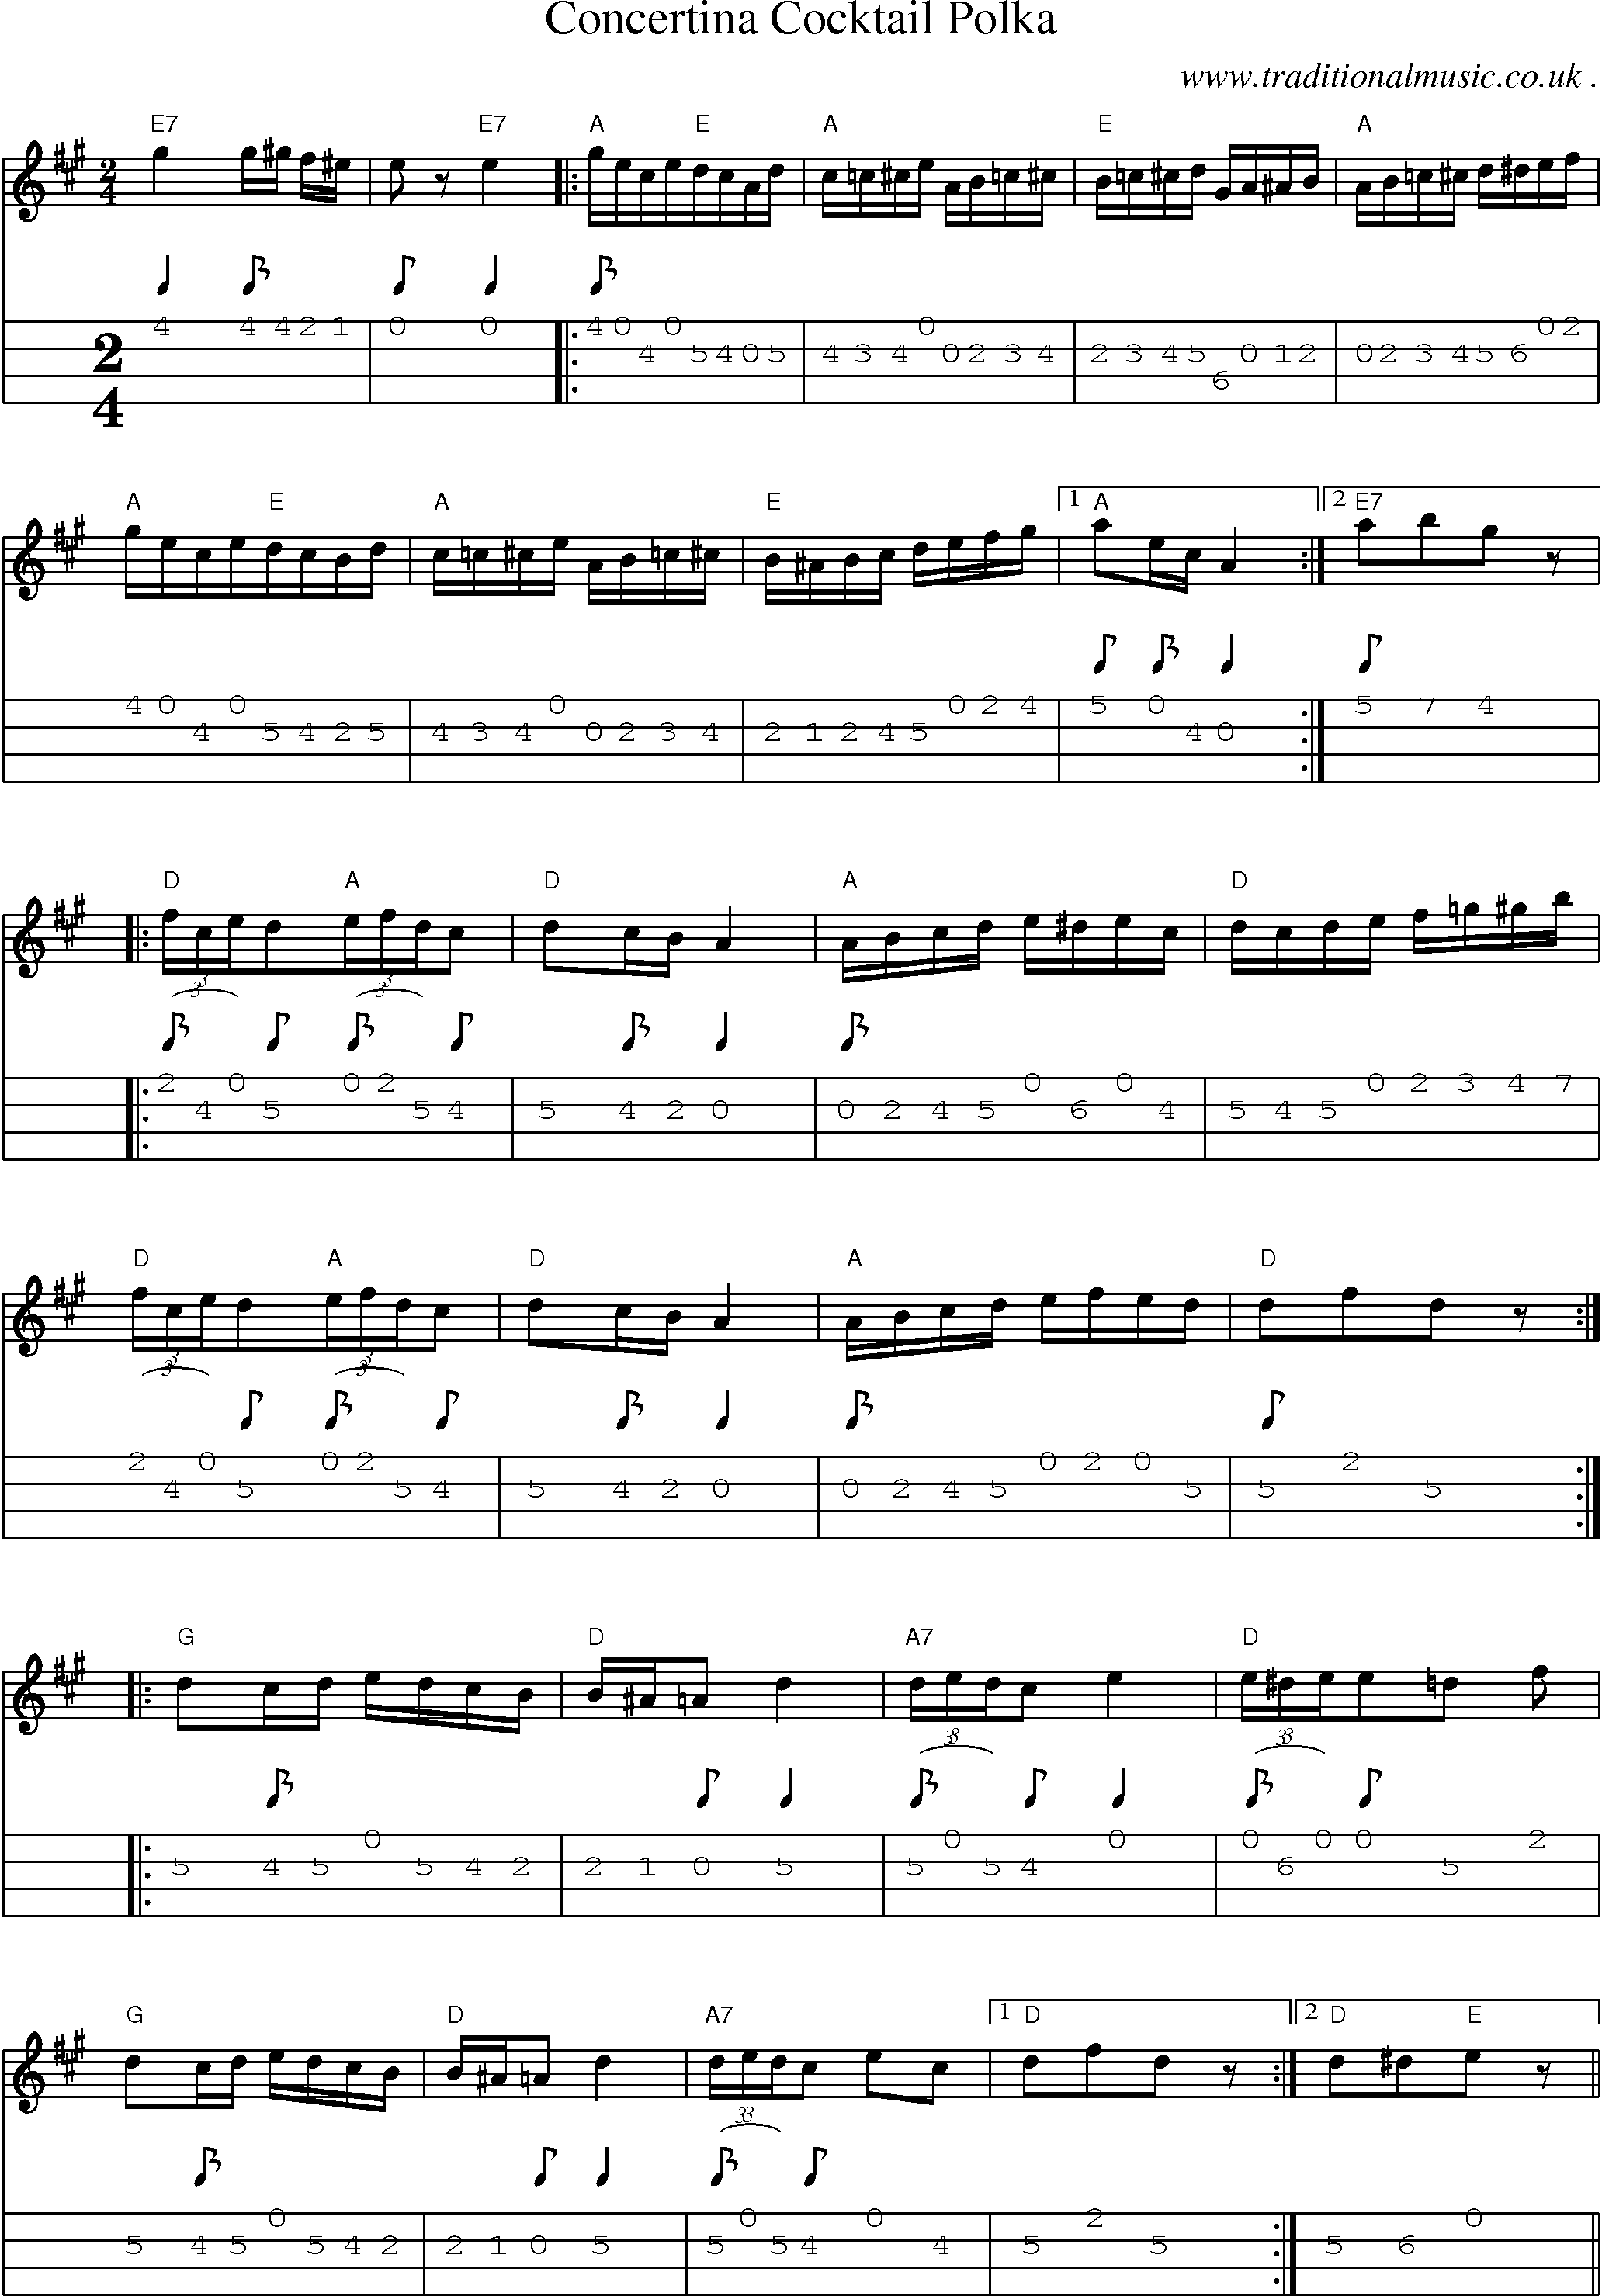 Sheet-Music and Mandolin Tabs for Concertina Cocktail Polka